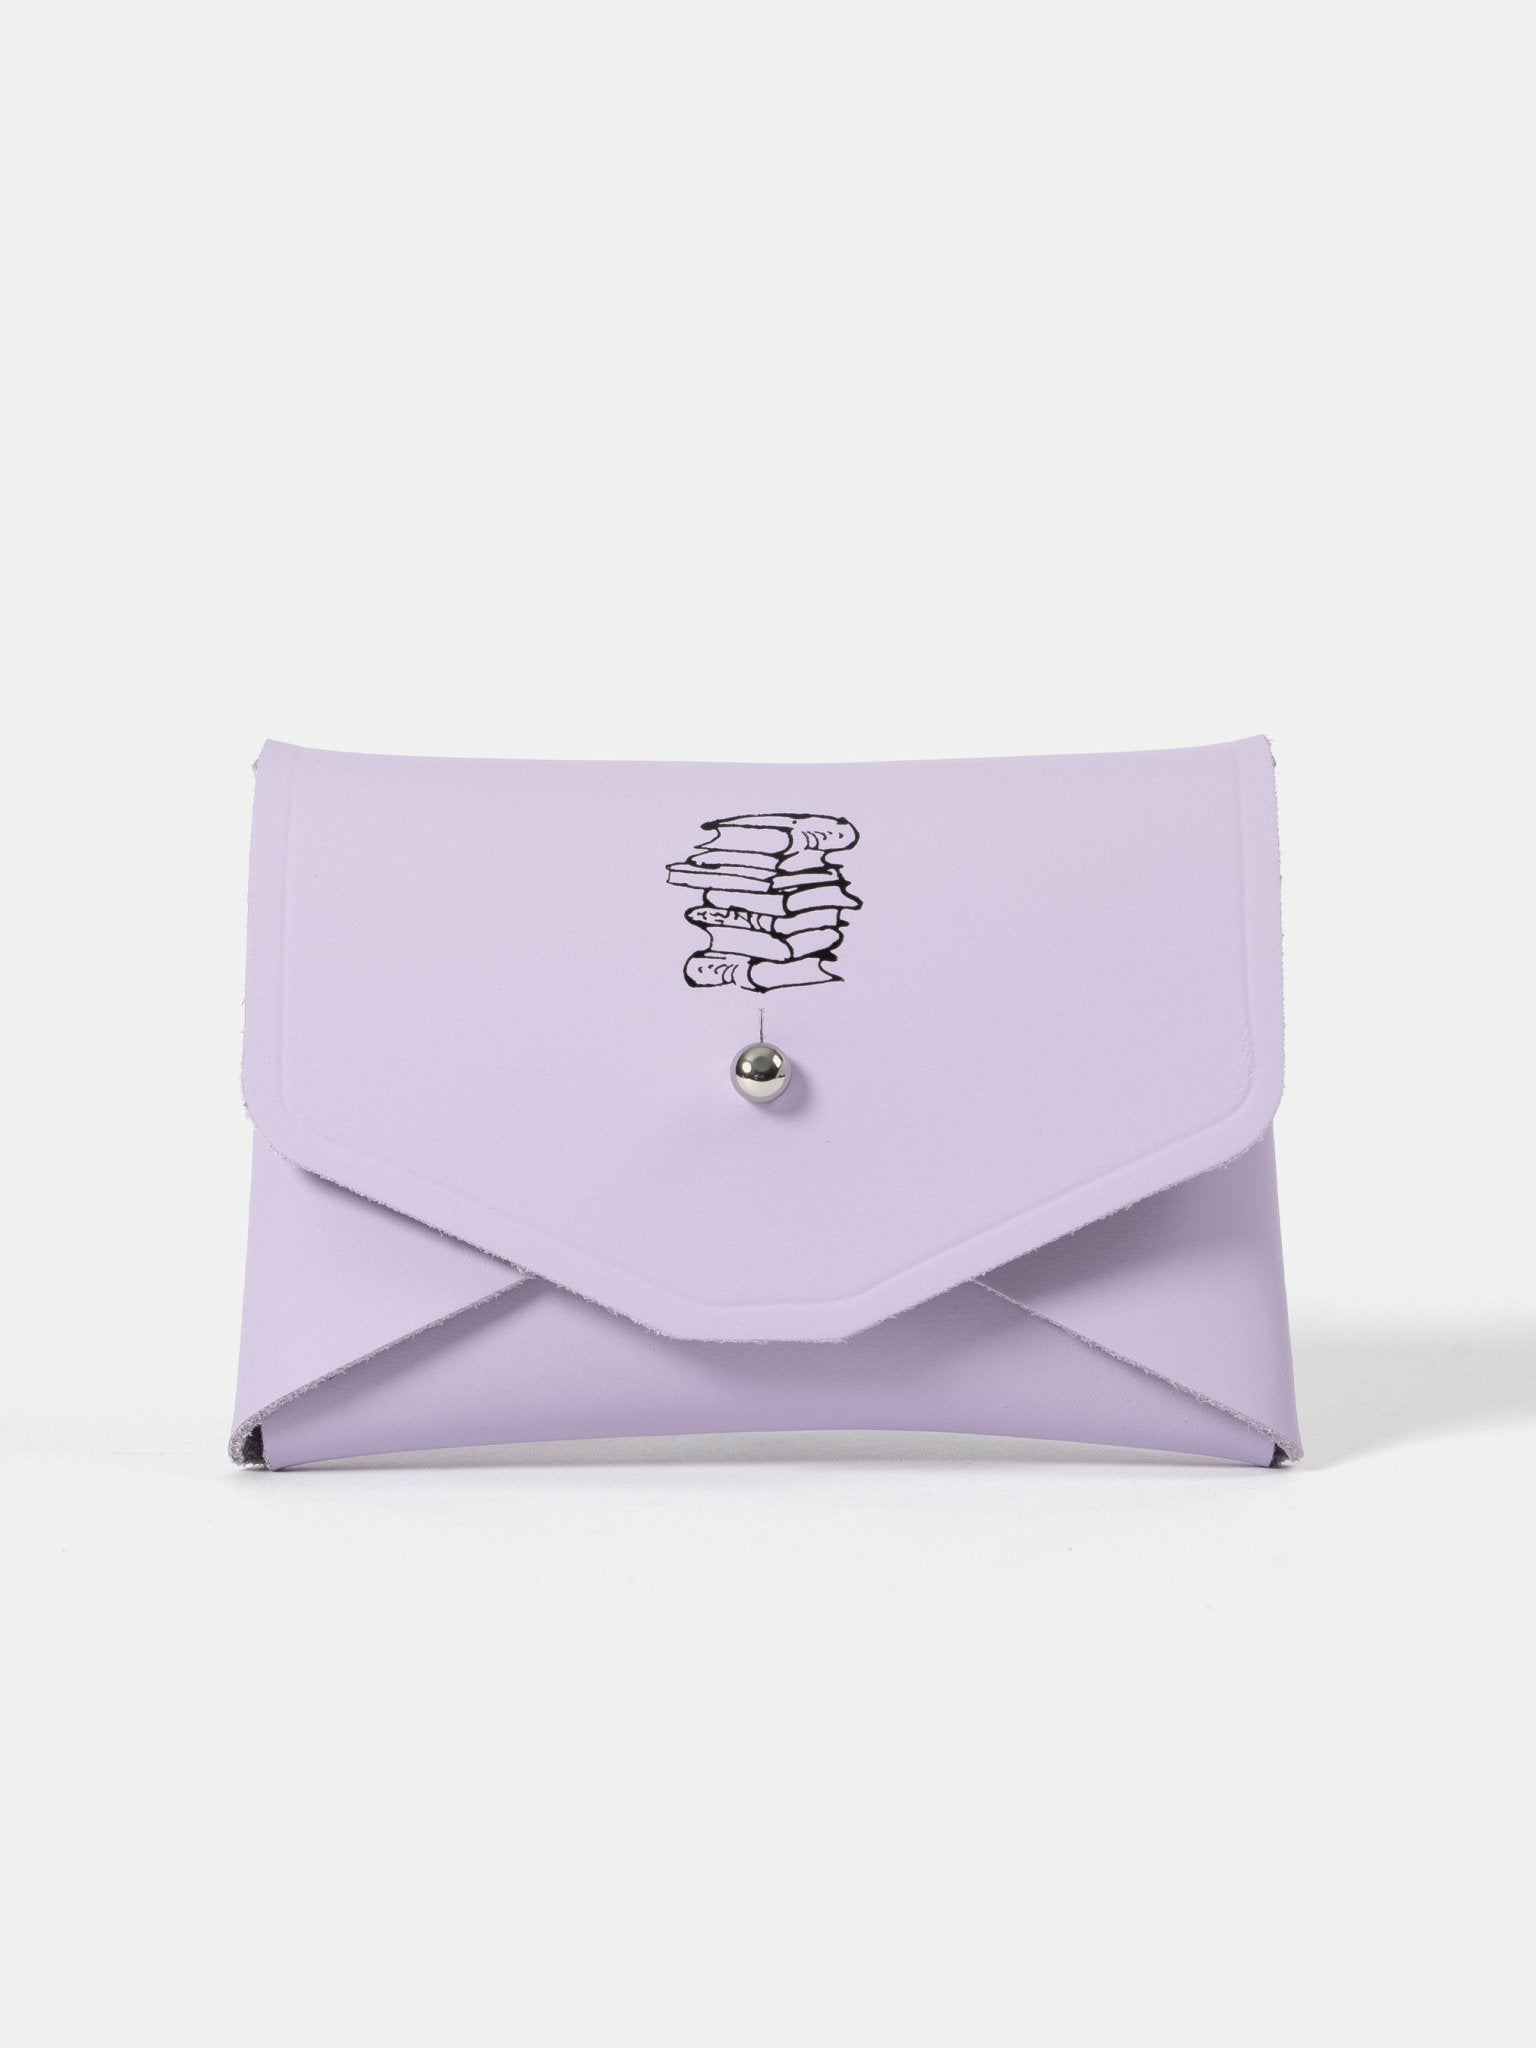 Fashionable Leopard Print & Rivet Decorated Large Capacity Clutch Bag /Wristlet/purse